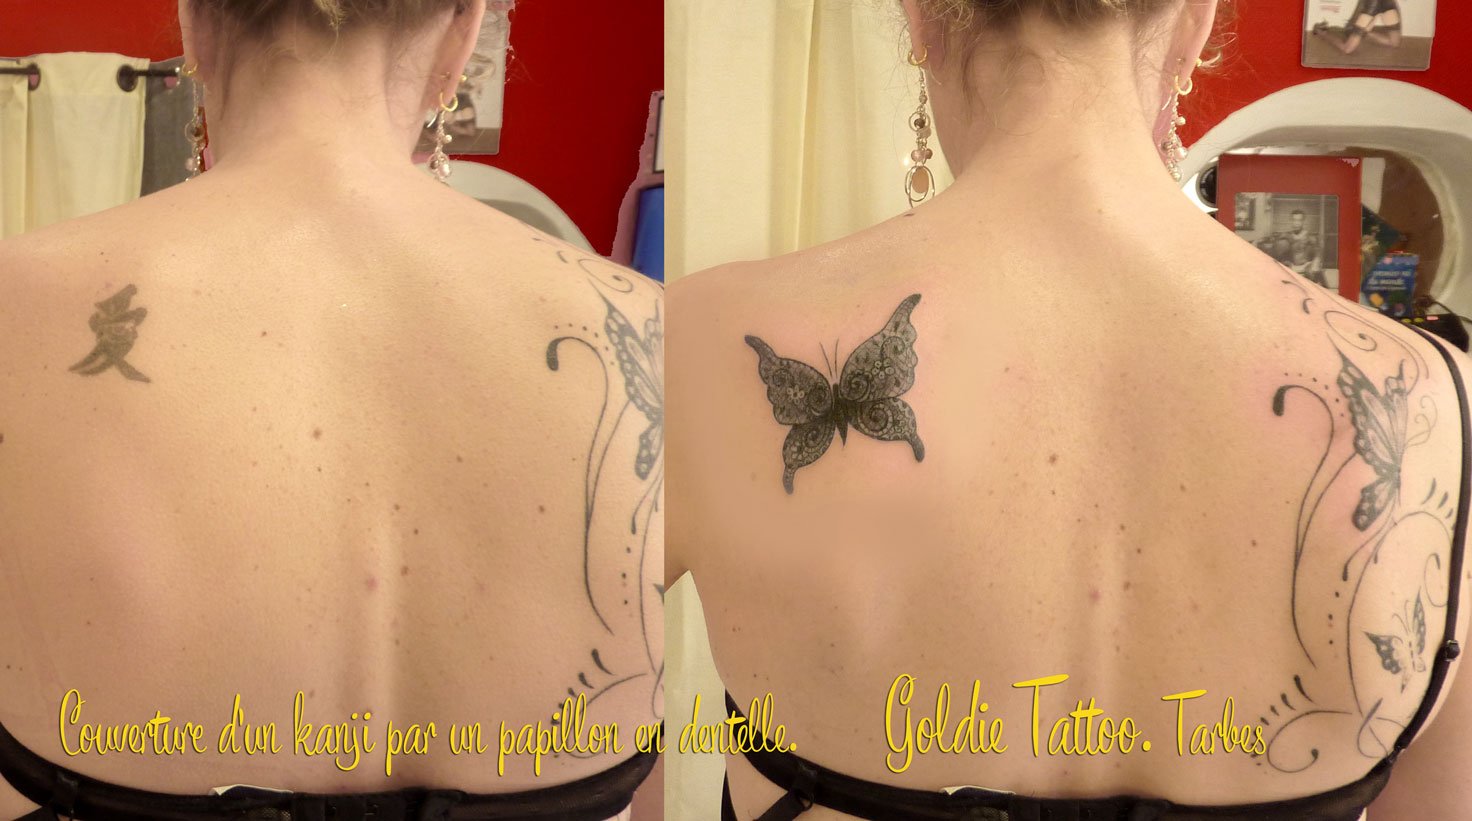 GOLDIE-TATTOO-Tarbes.Avril-2015couverture-par-papillon-dentellex..web.jpg